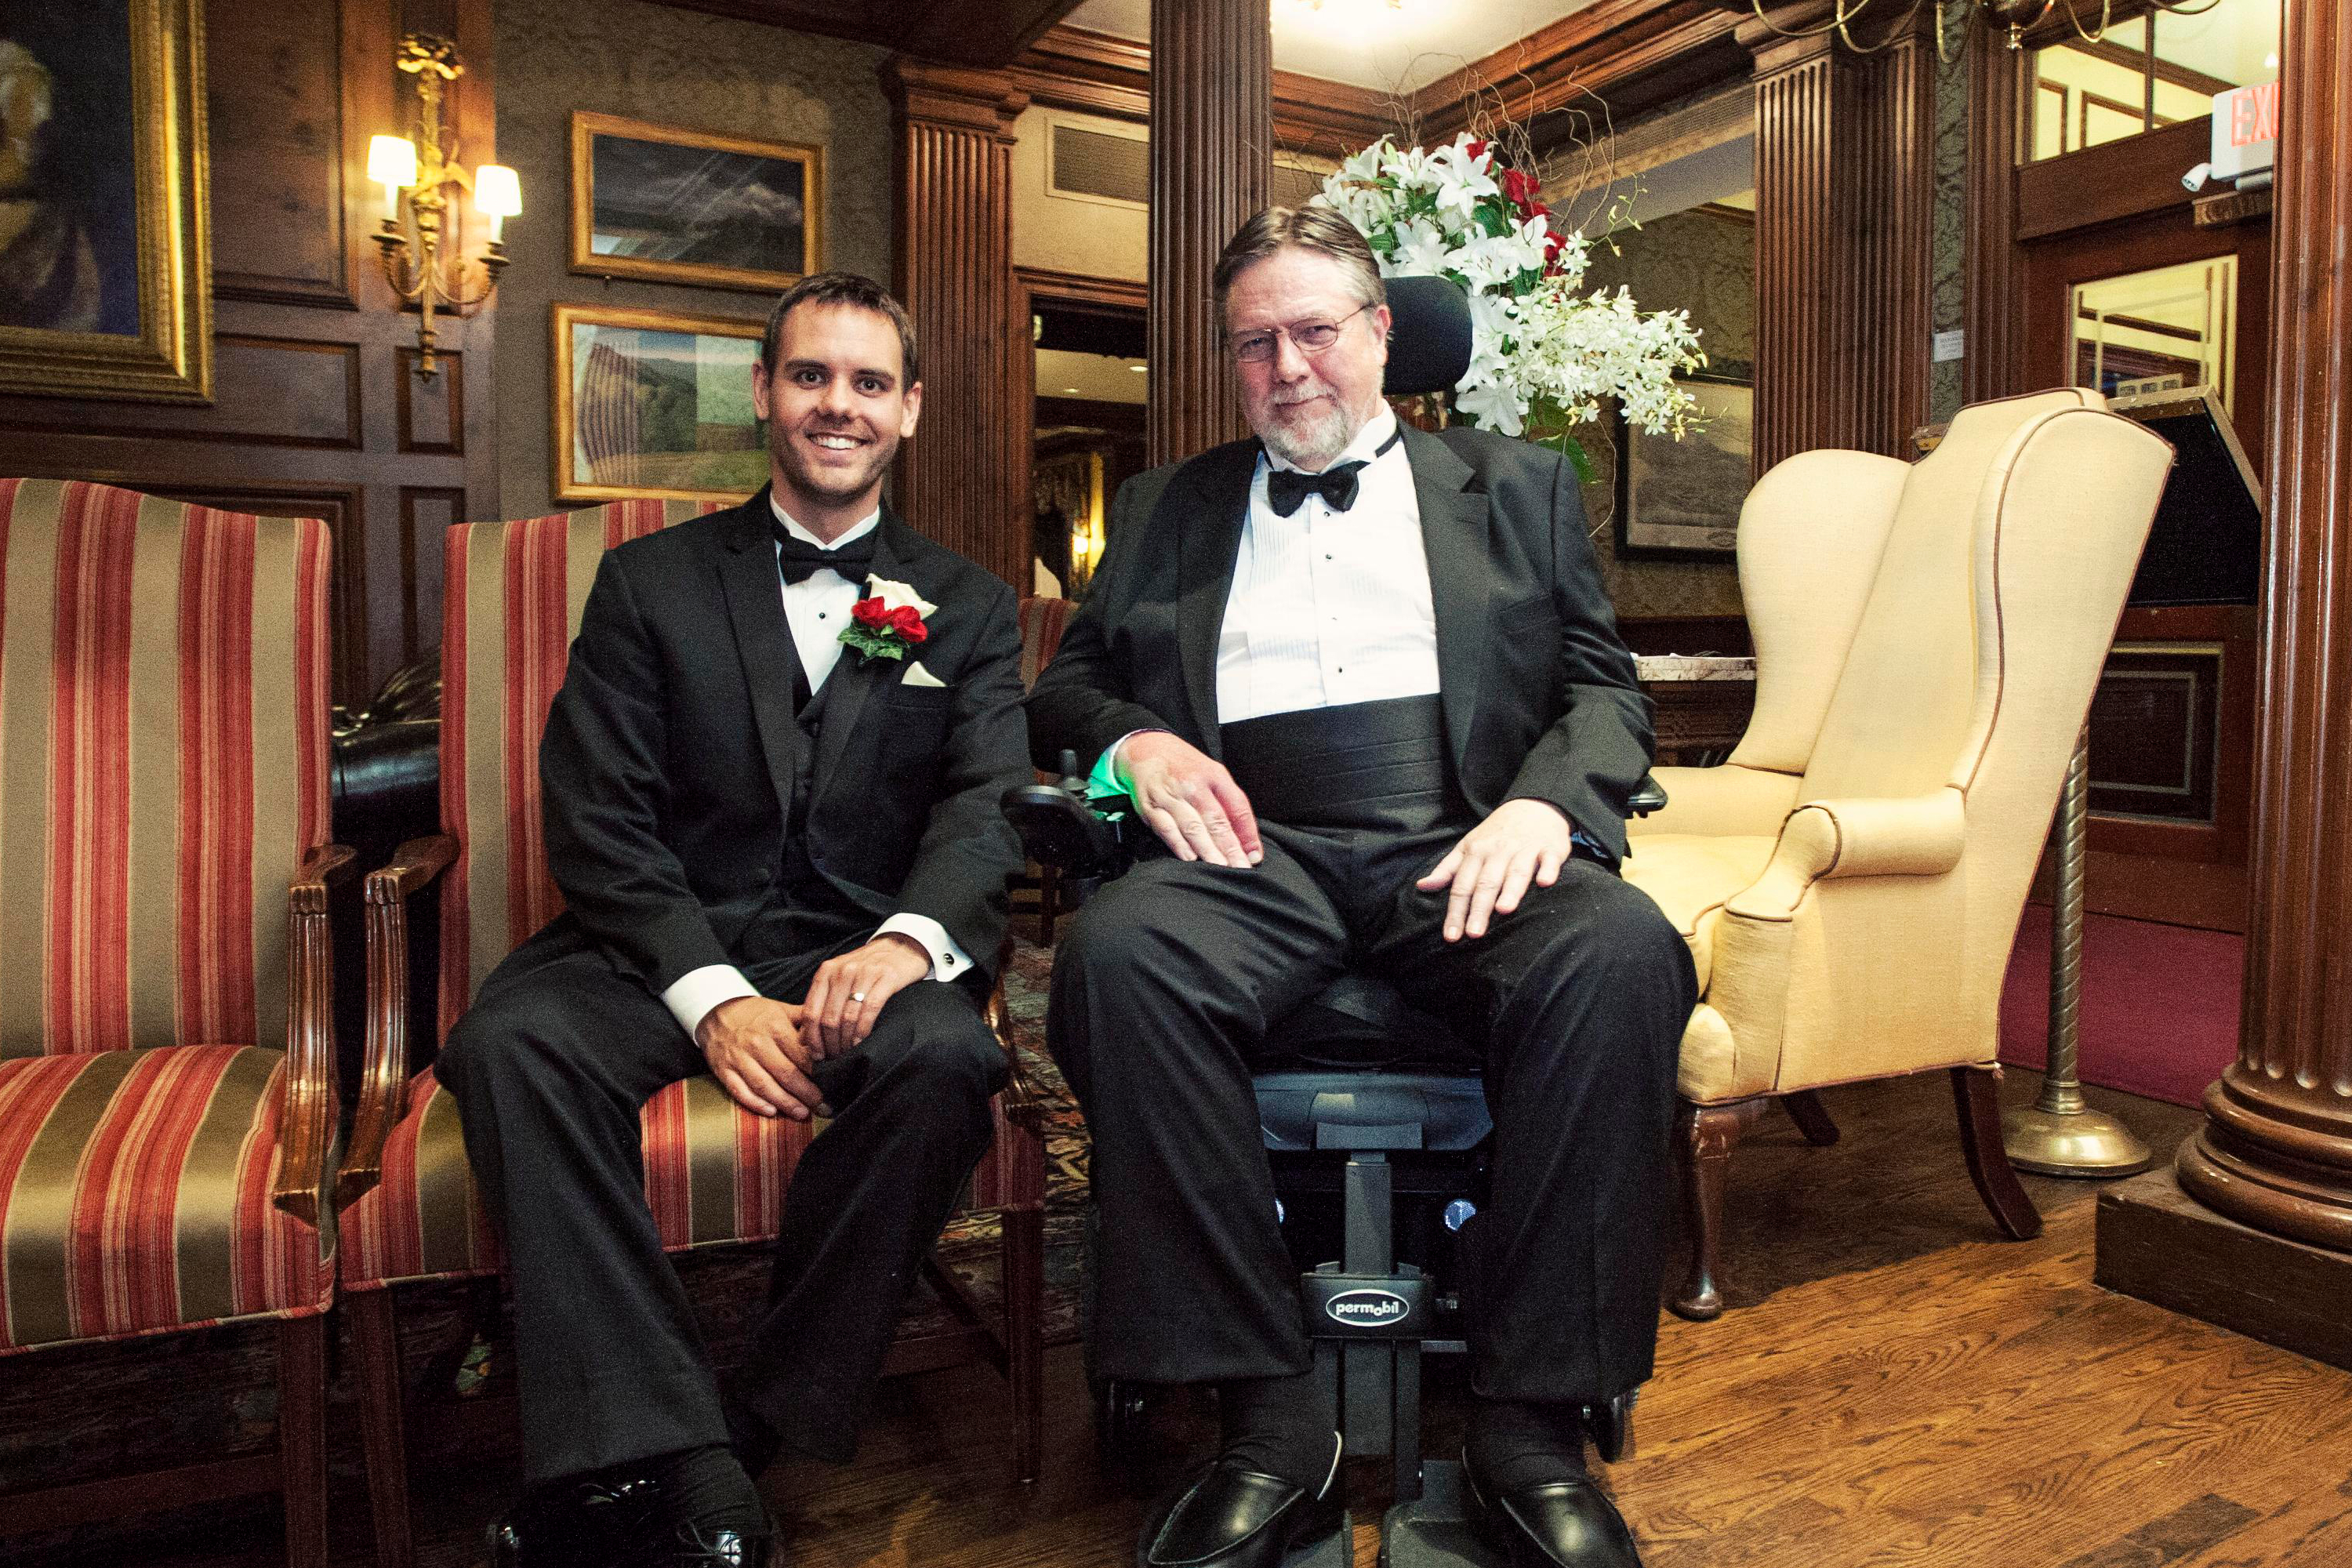 Kurt Gray and Daniel Wegner pose together in formal garb.